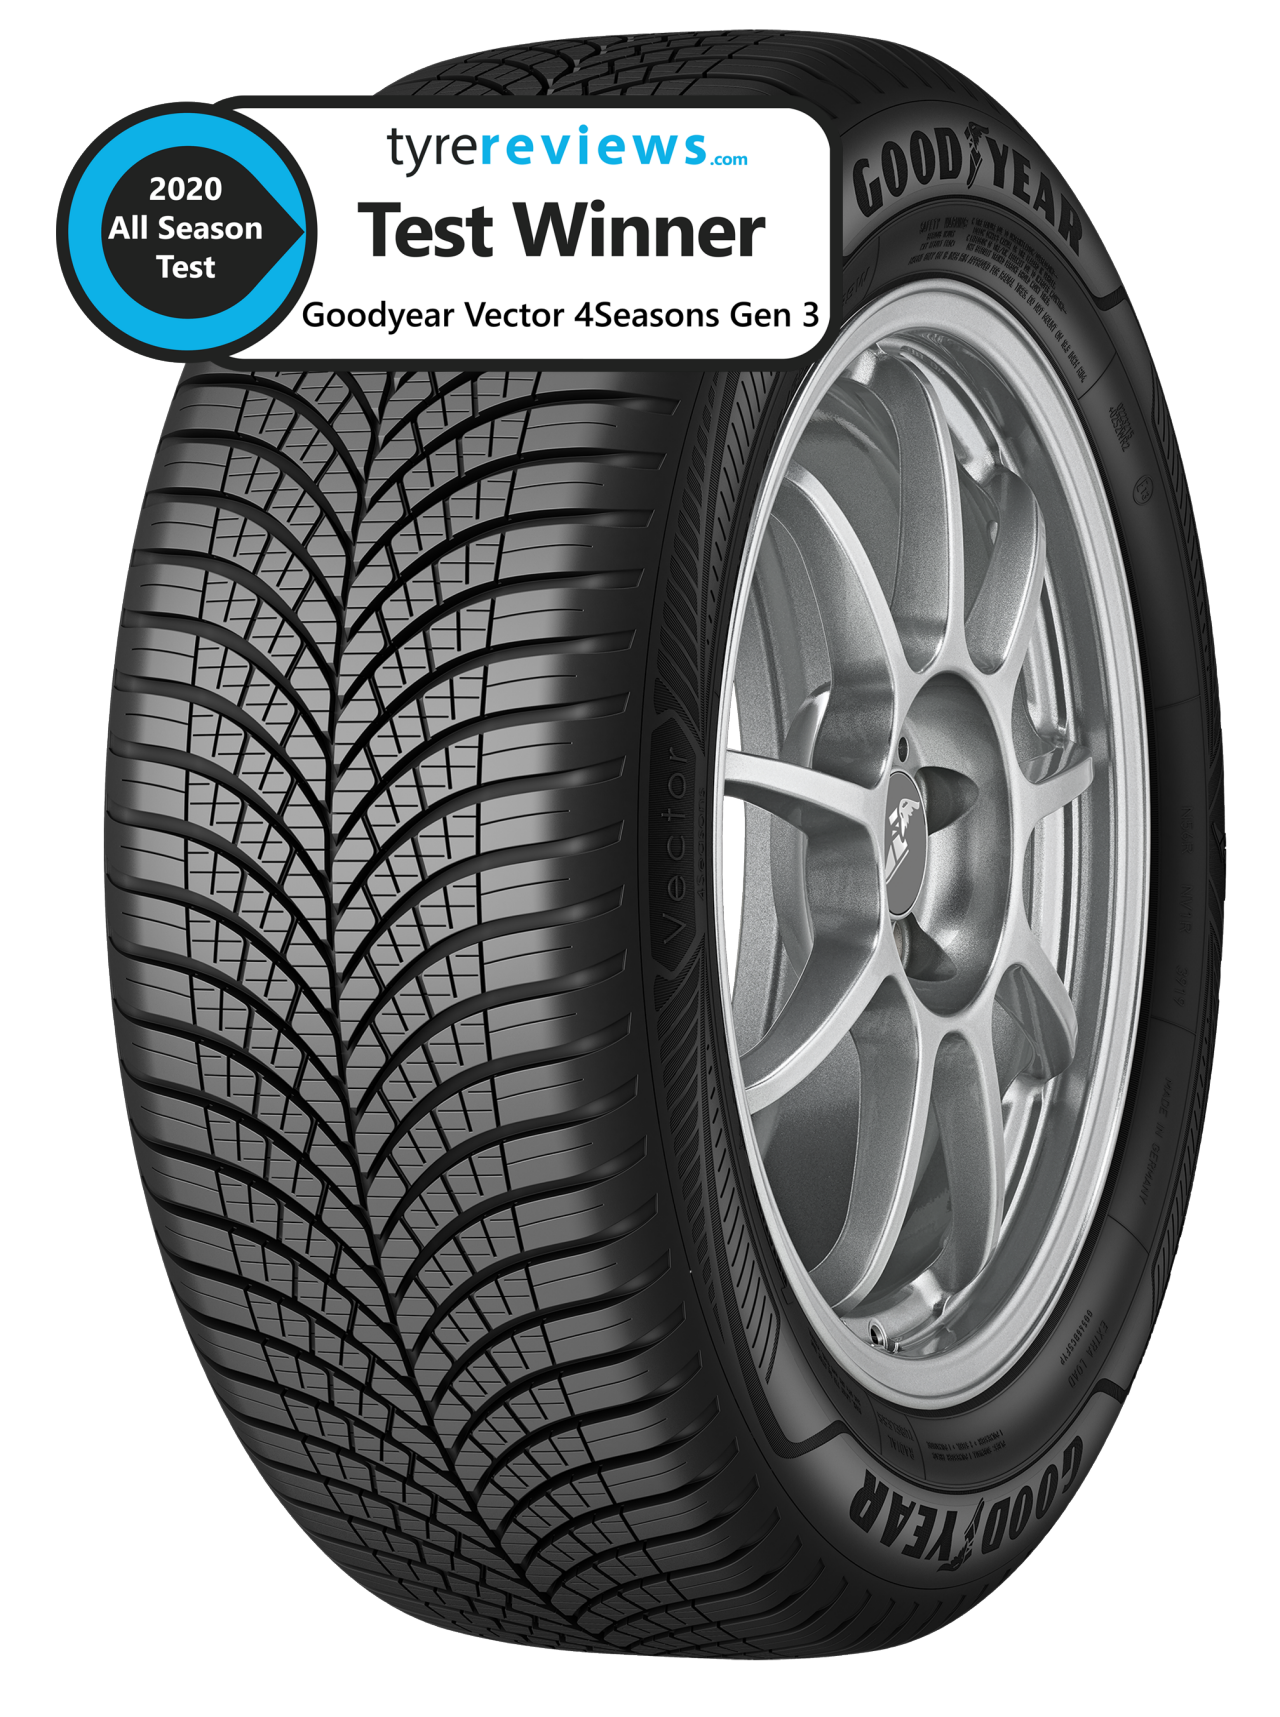 The Goodyear Vector 4Seasons Gen-3 tyre won the Tyre Reviews All Season 2020 Tyre Test